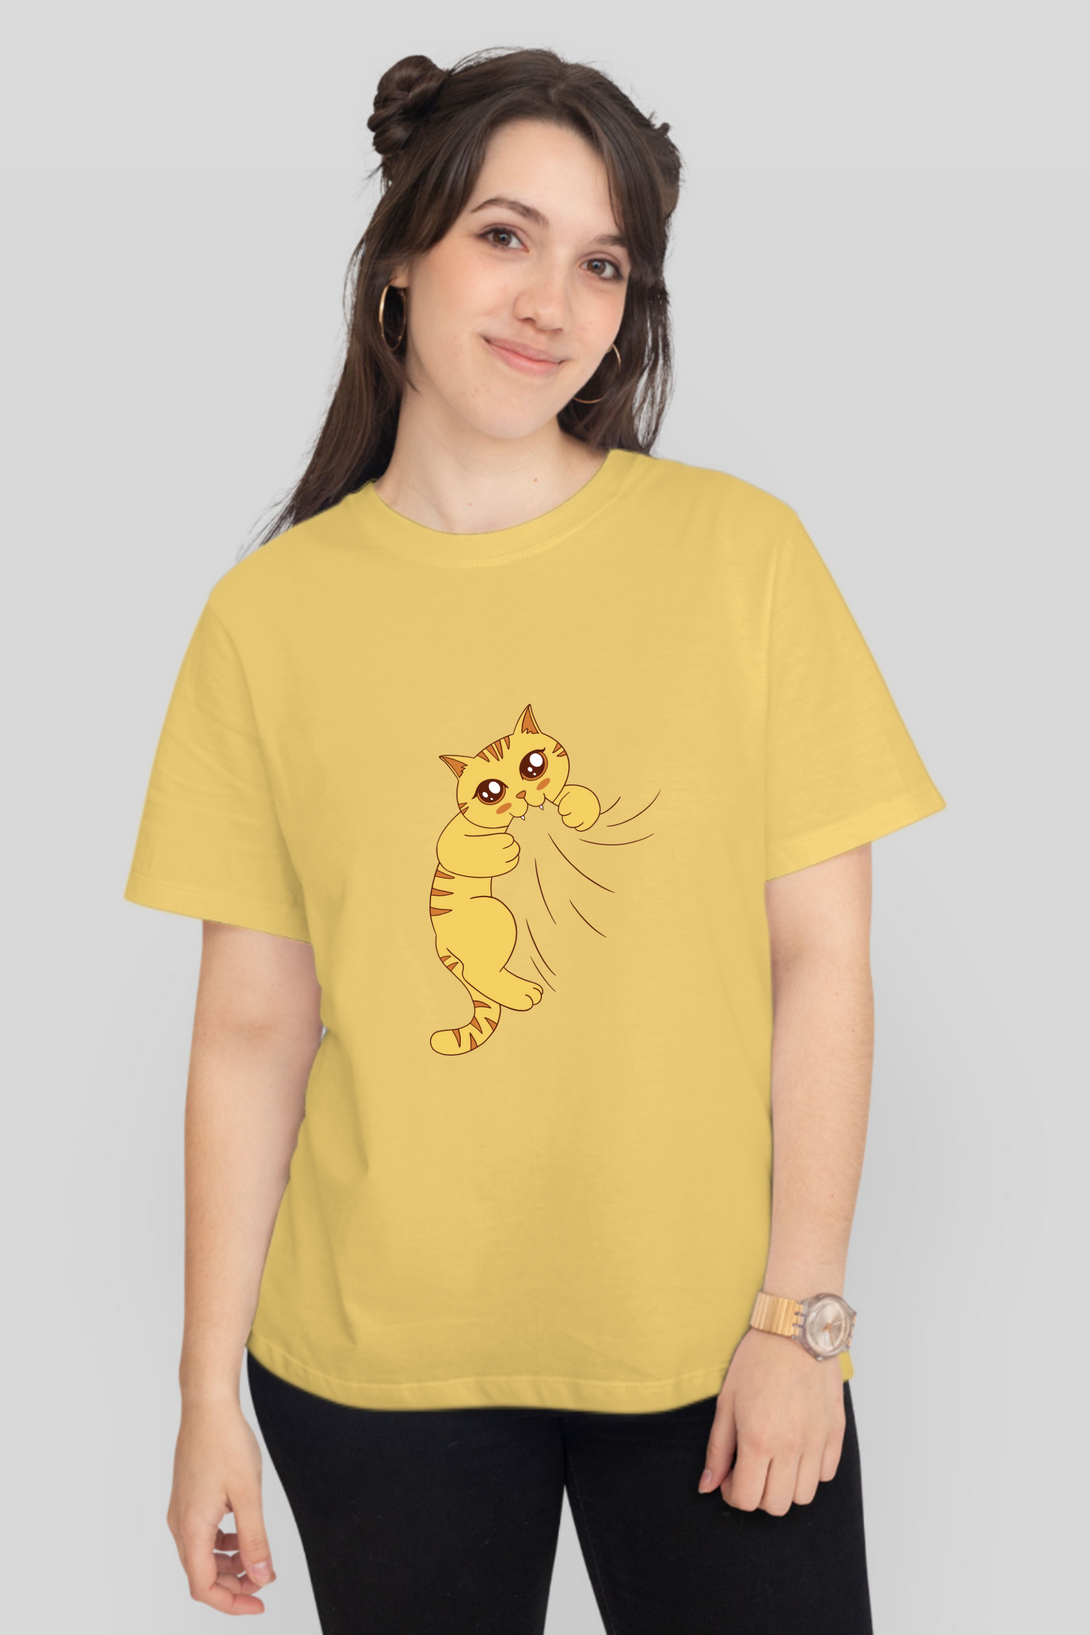 Cat Biting Printed T-Shirt For Women - WowWaves - 7